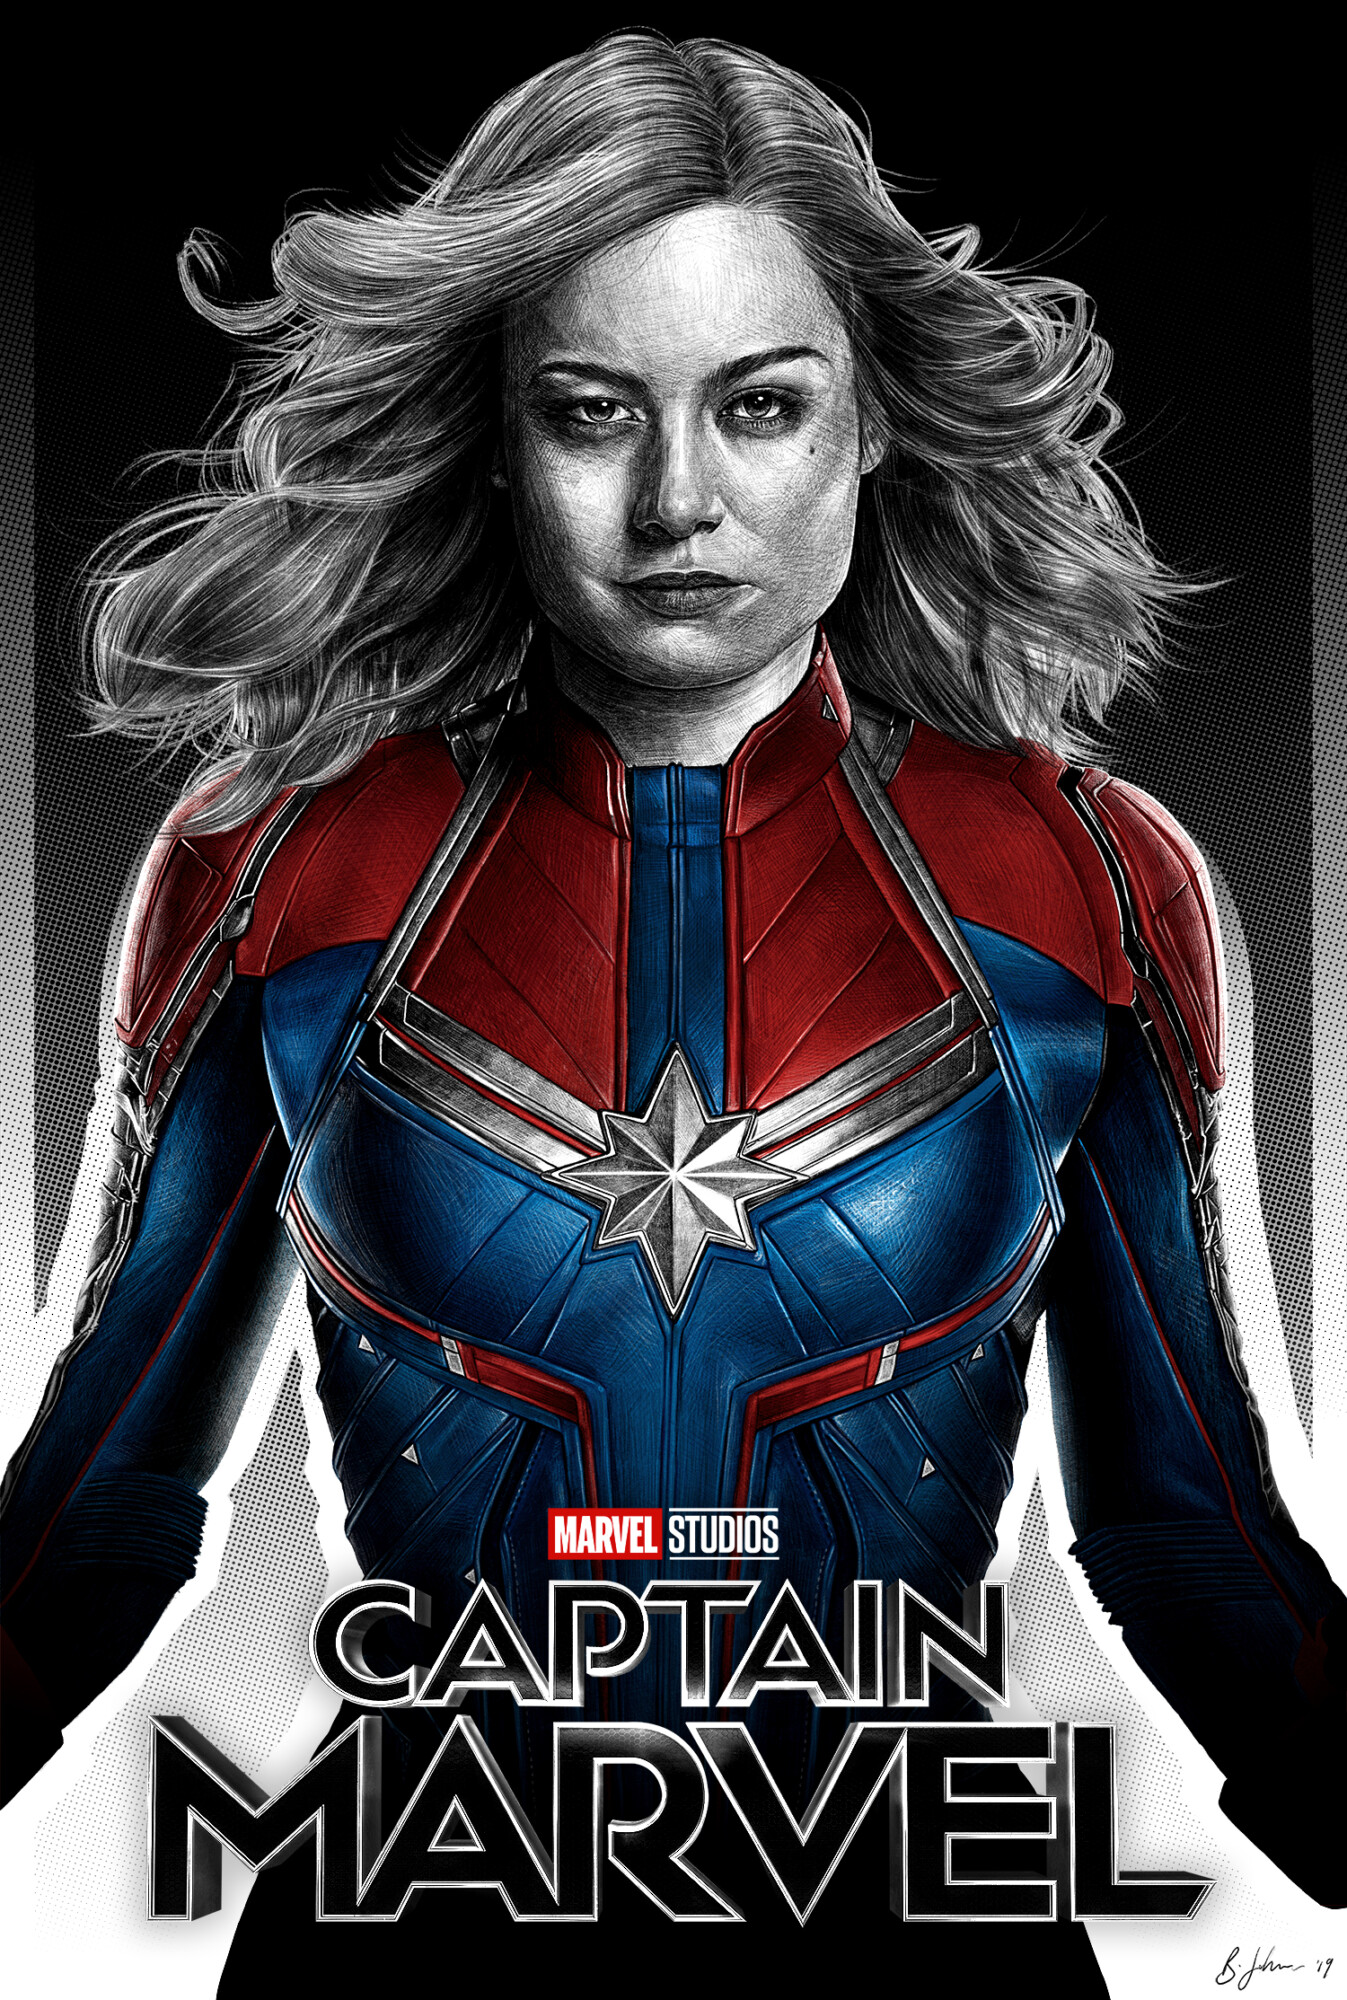 Poster A2 Capitana Marvel Capitain Marvel Pelicula Film Cartel Decor 02 